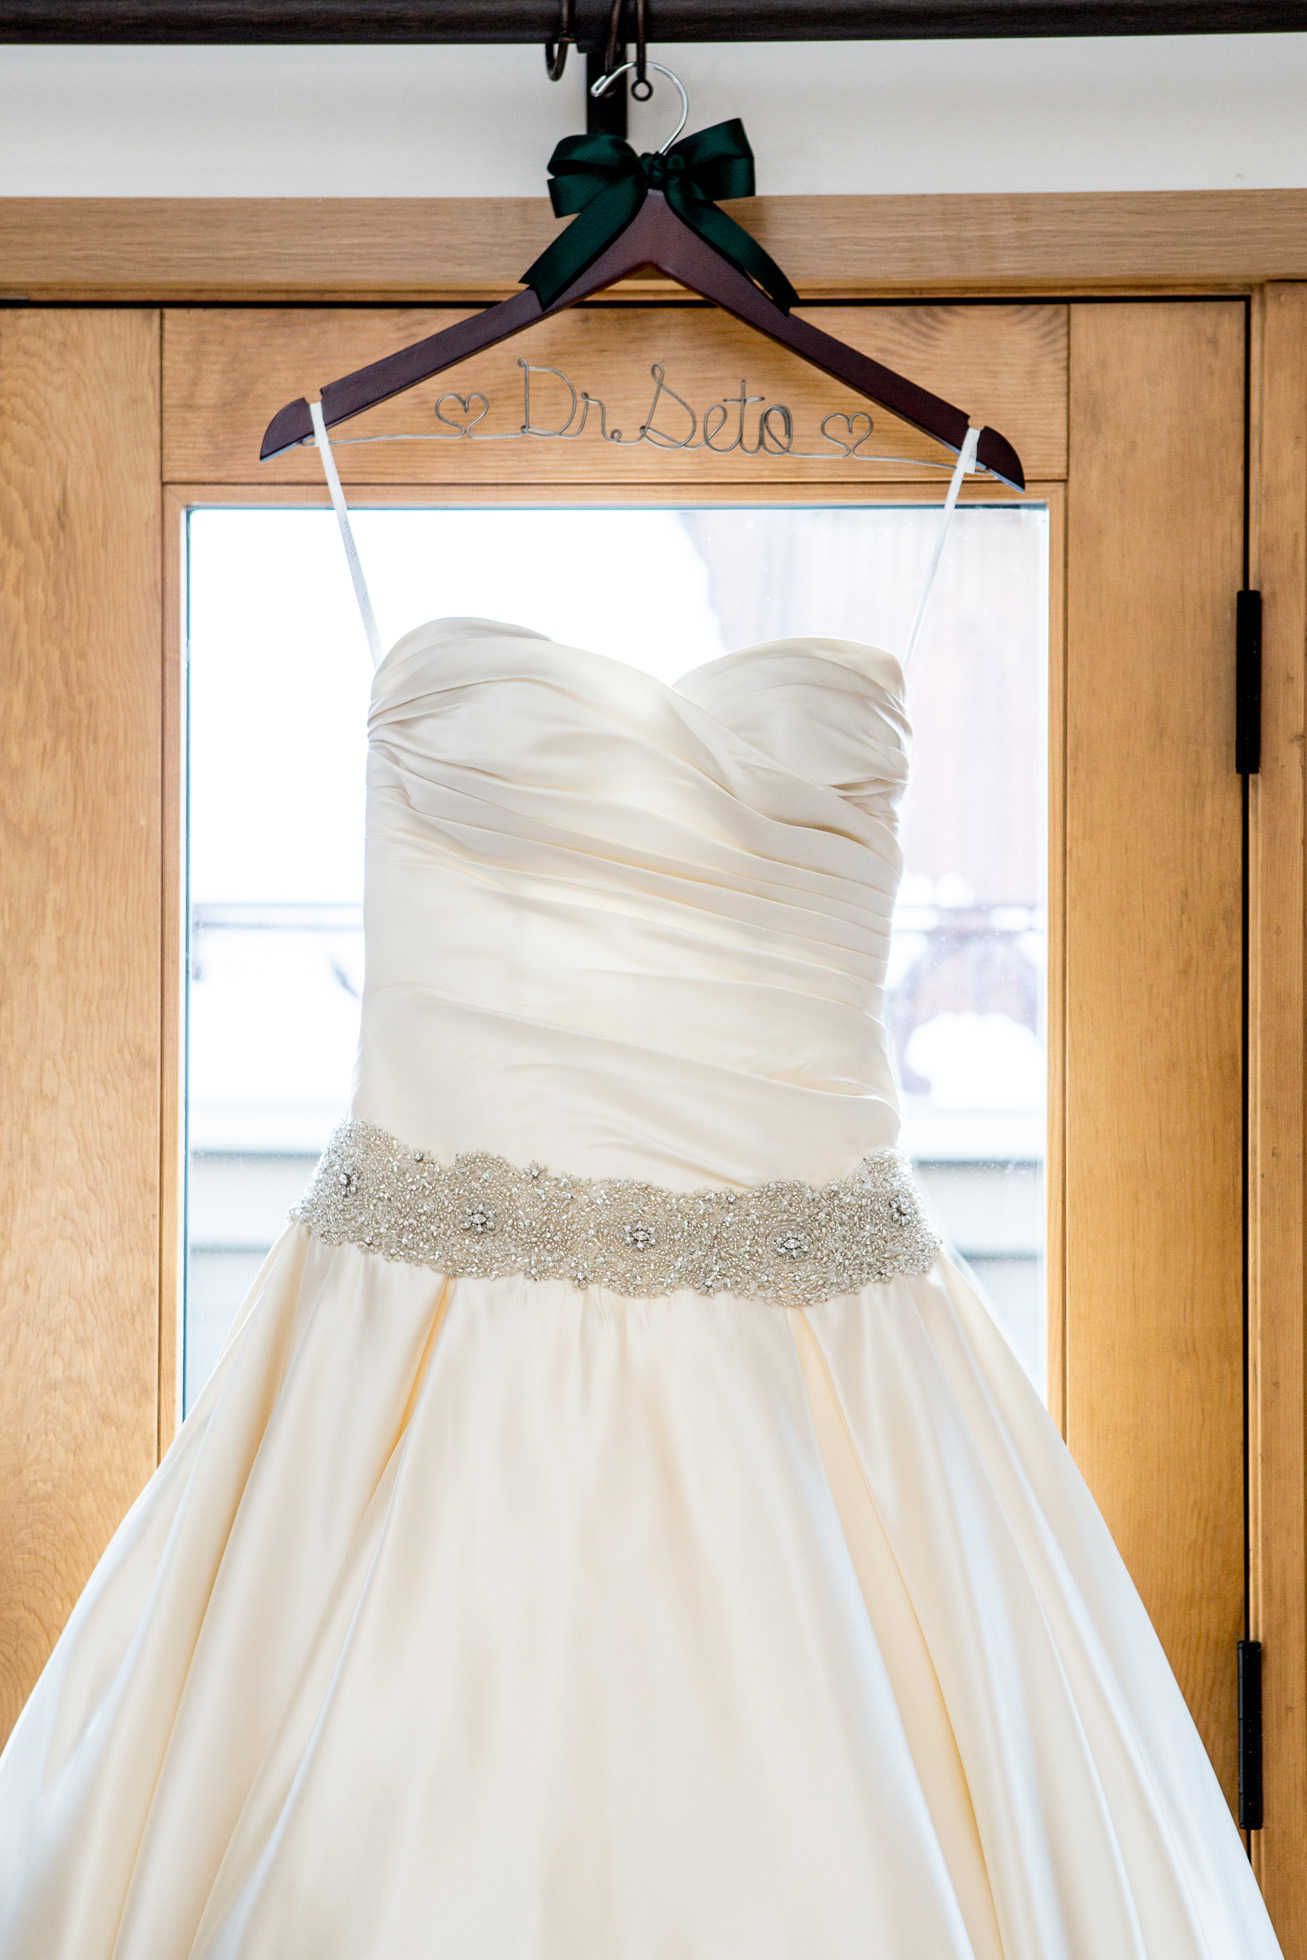 Telluride wedding dress with custom hanger